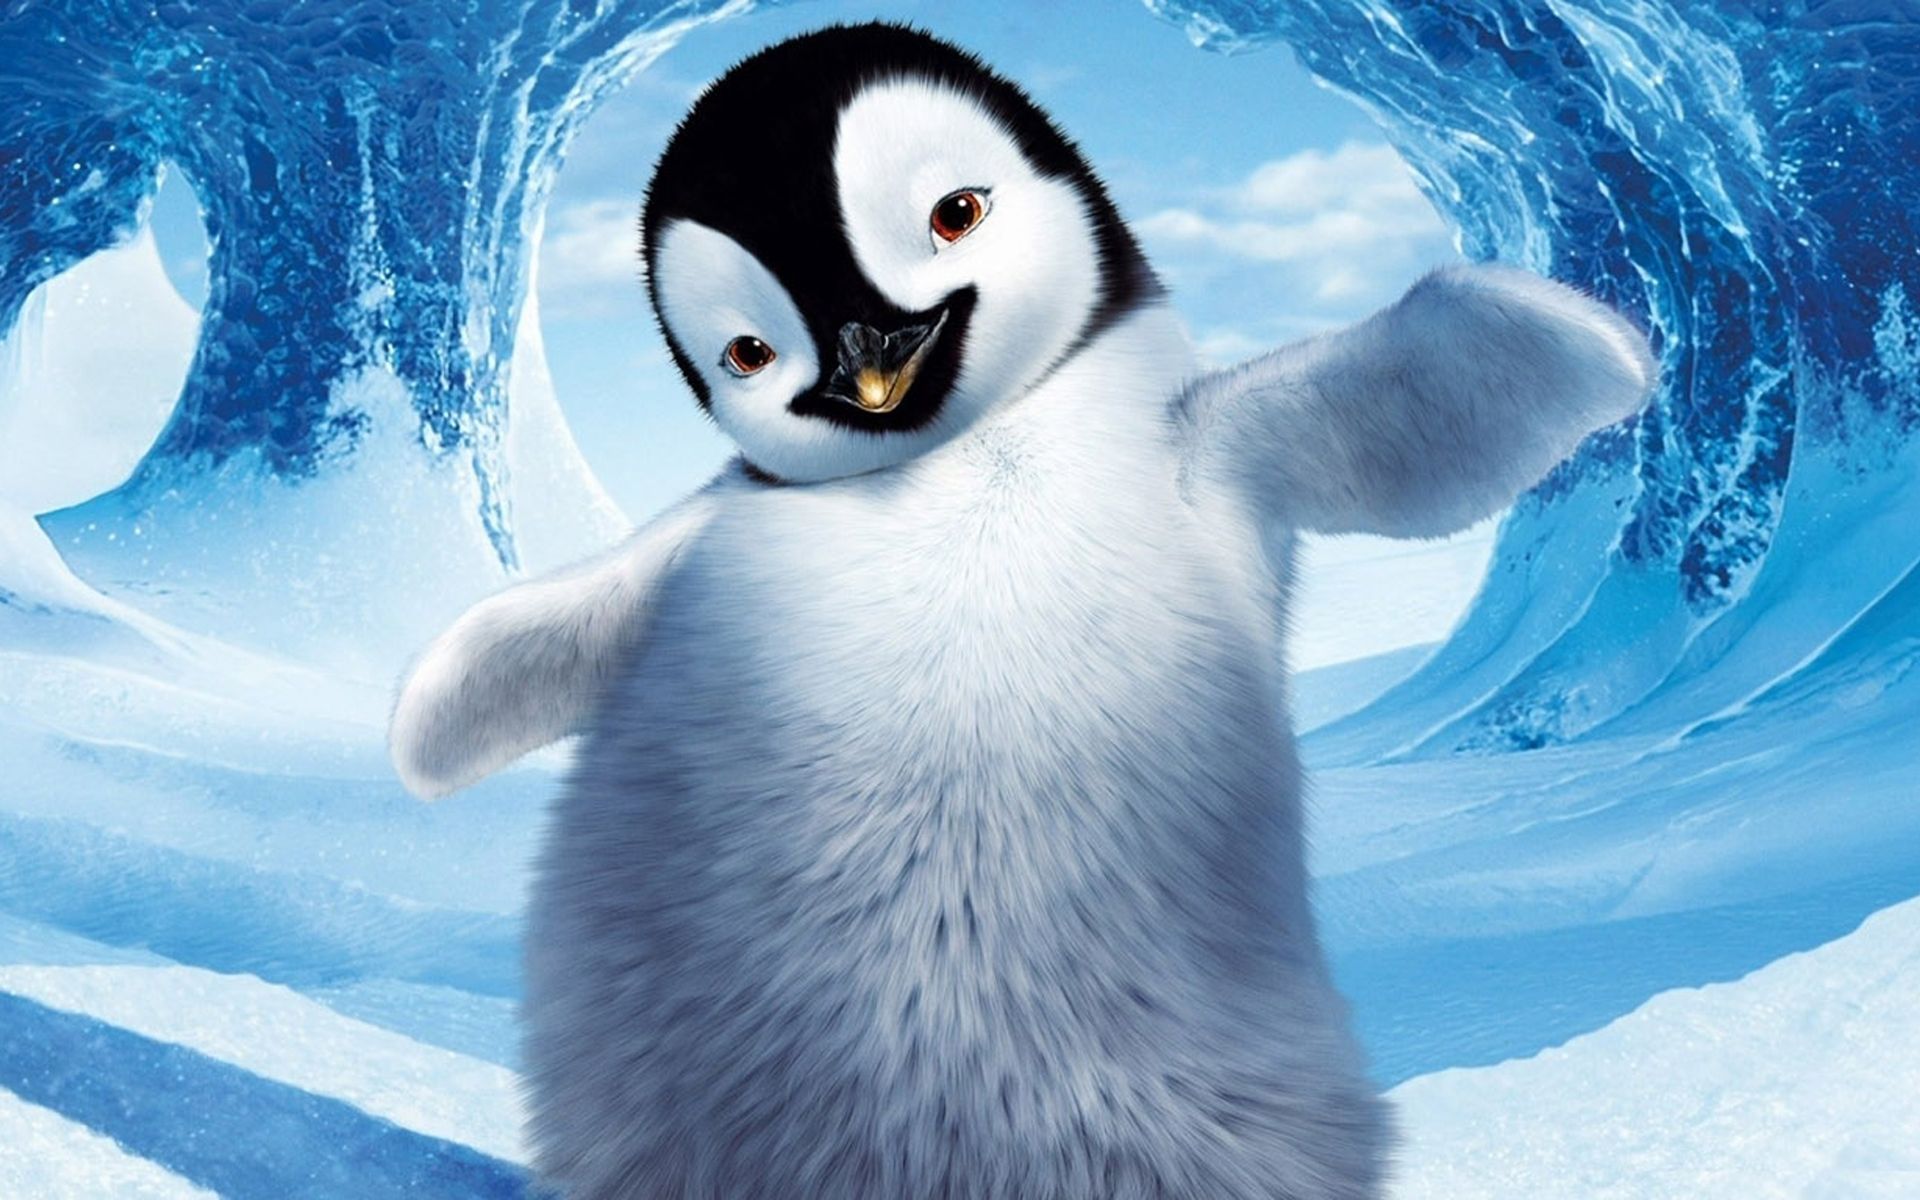 Penguin Background Wallpaper Image